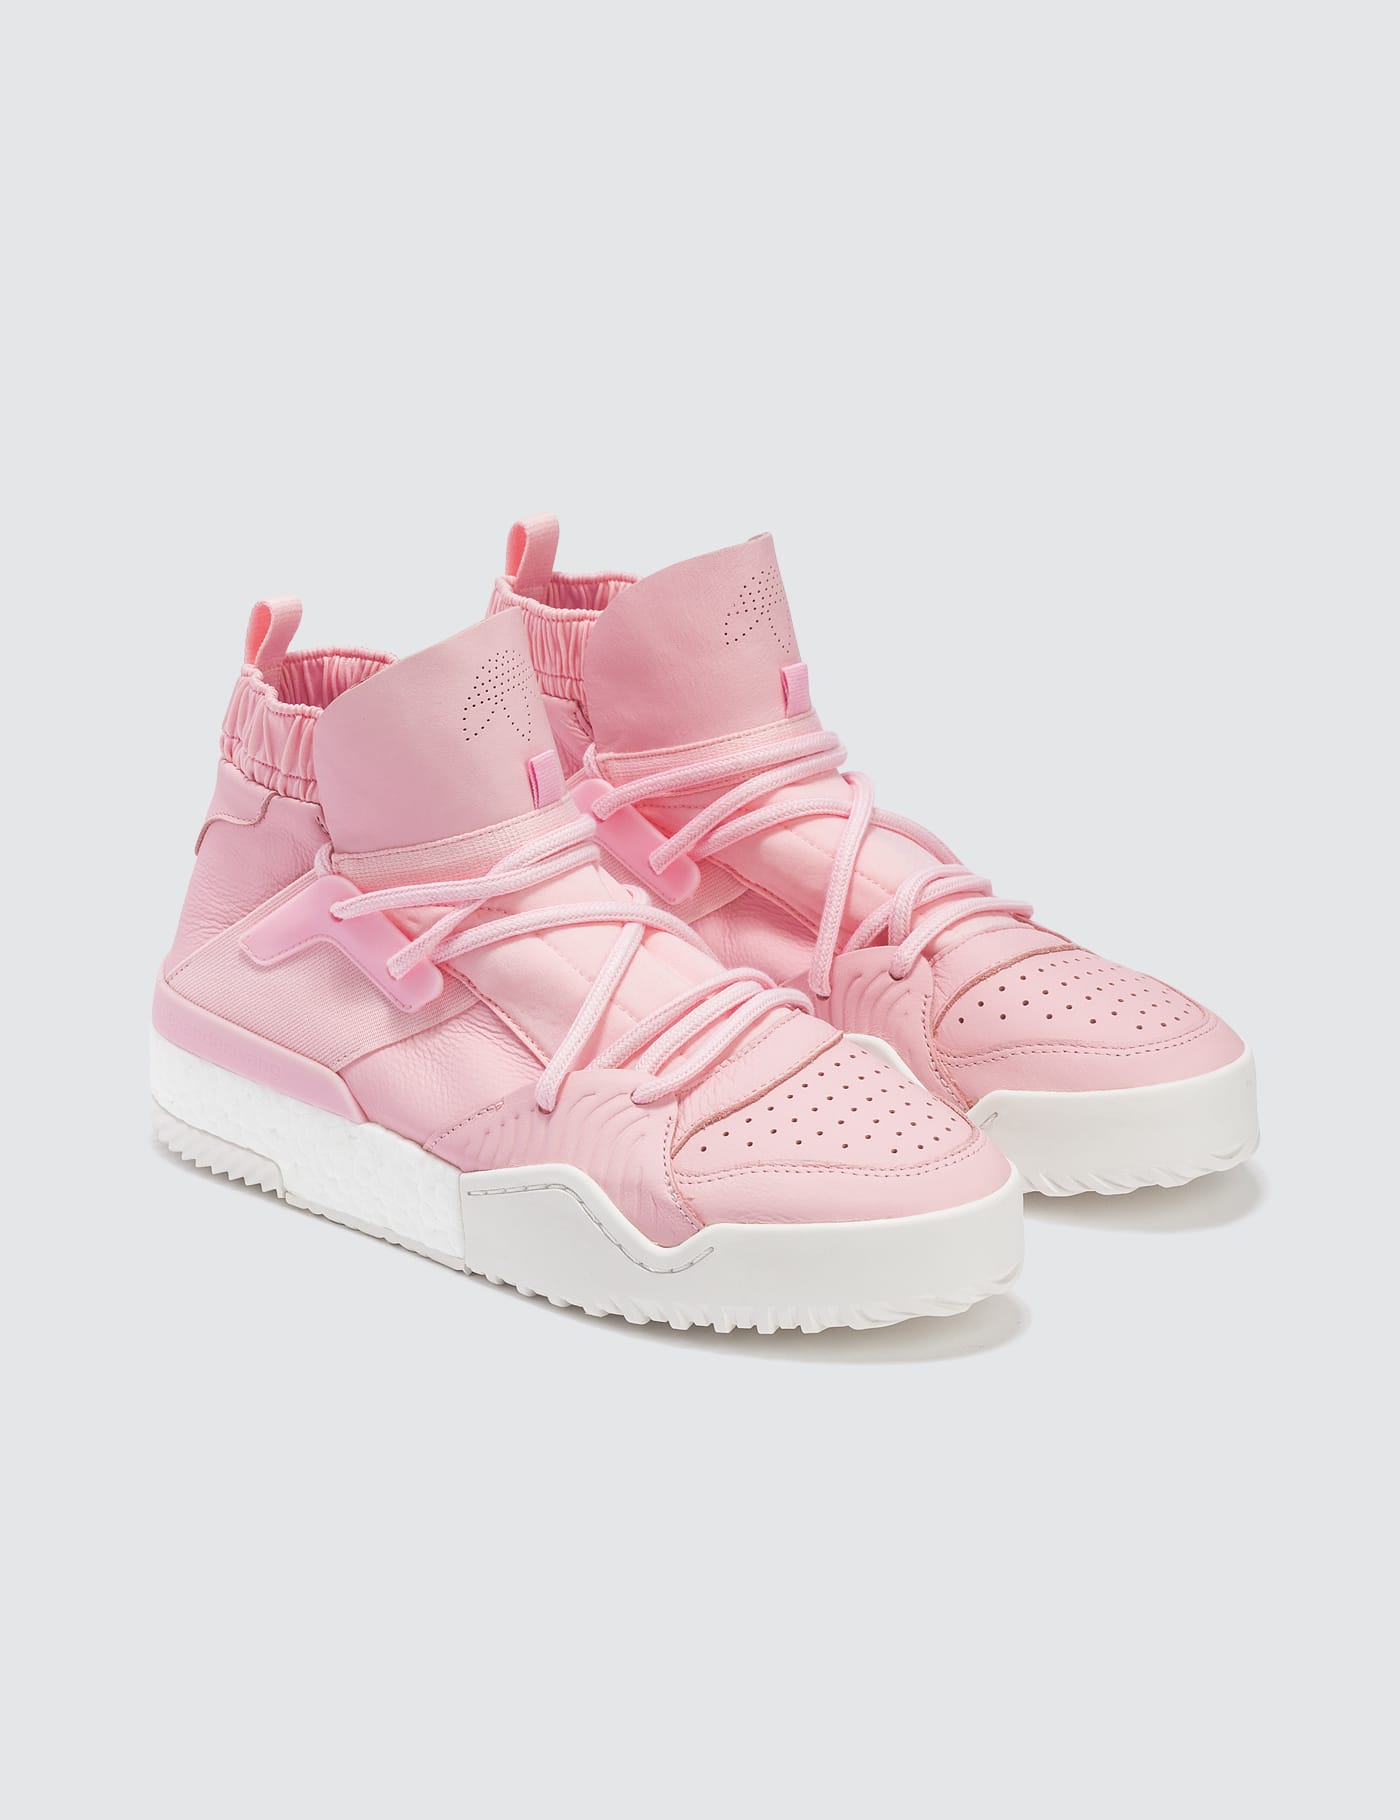 adidas alexander wang pink